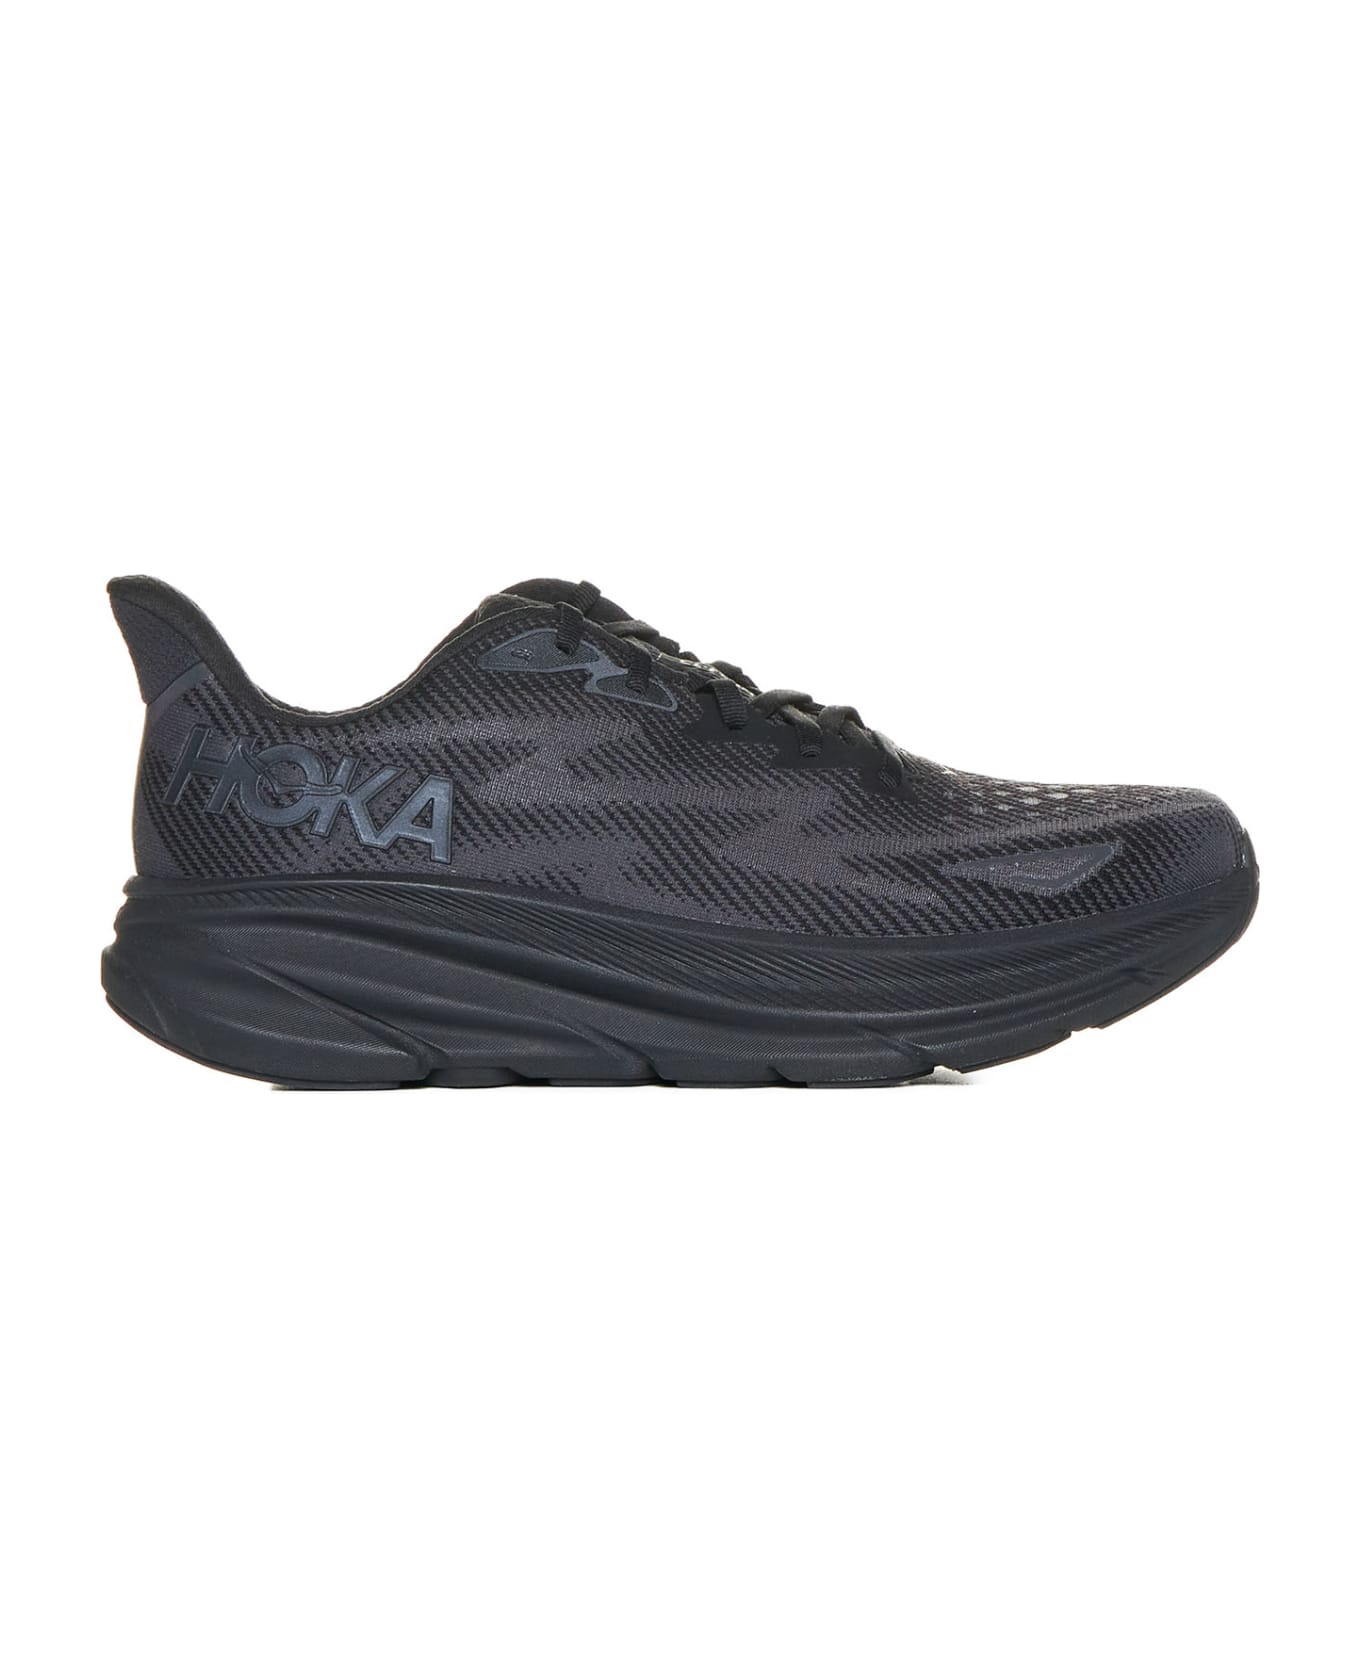 Hoka Sneakers - Black black